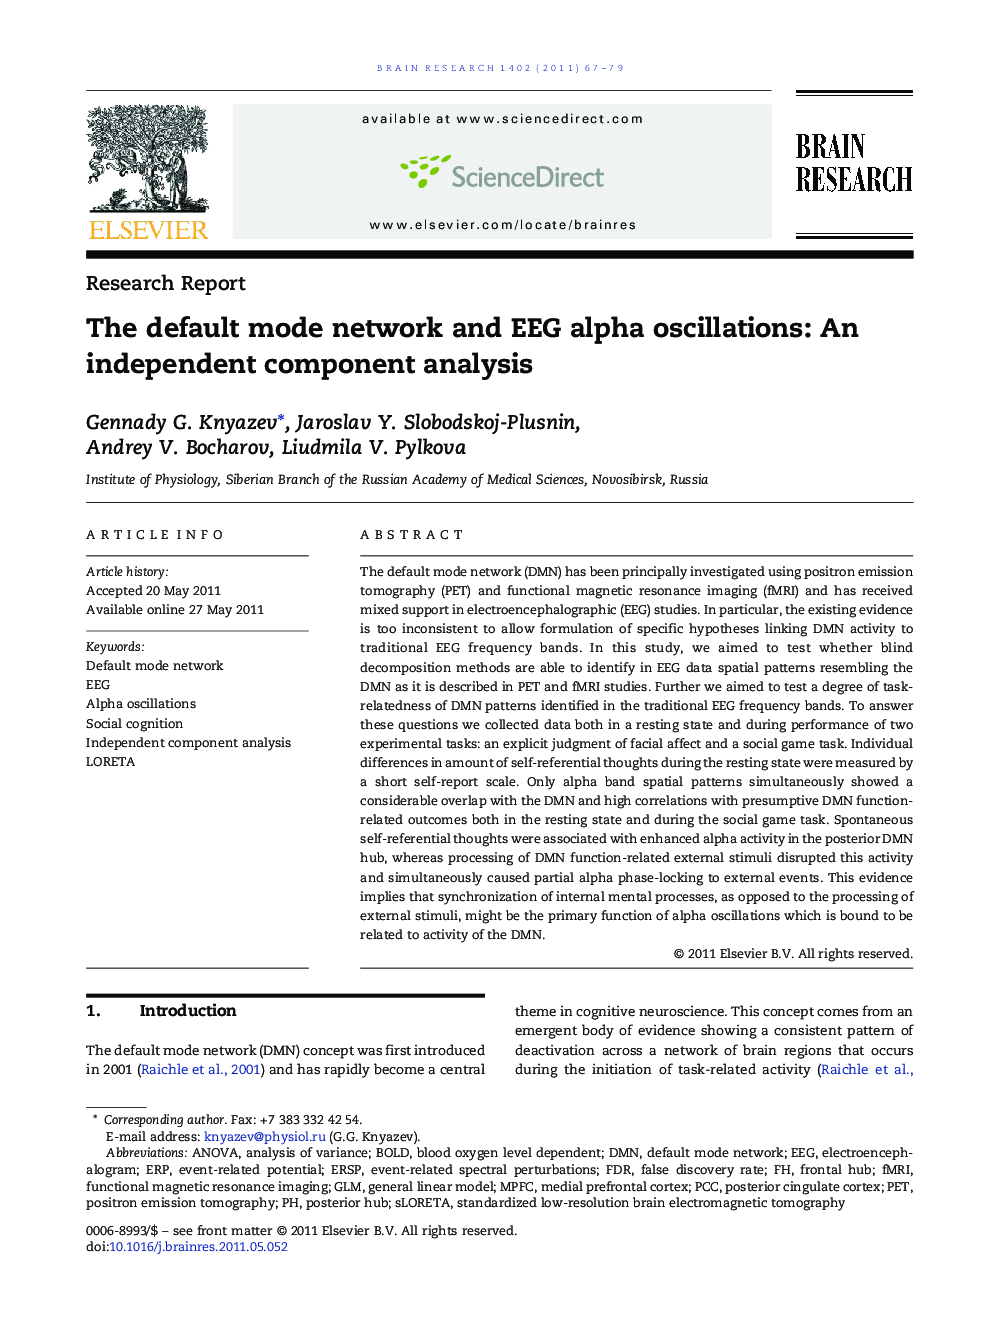 The default mode network and EEG alpha oscillations: An independent component analysis